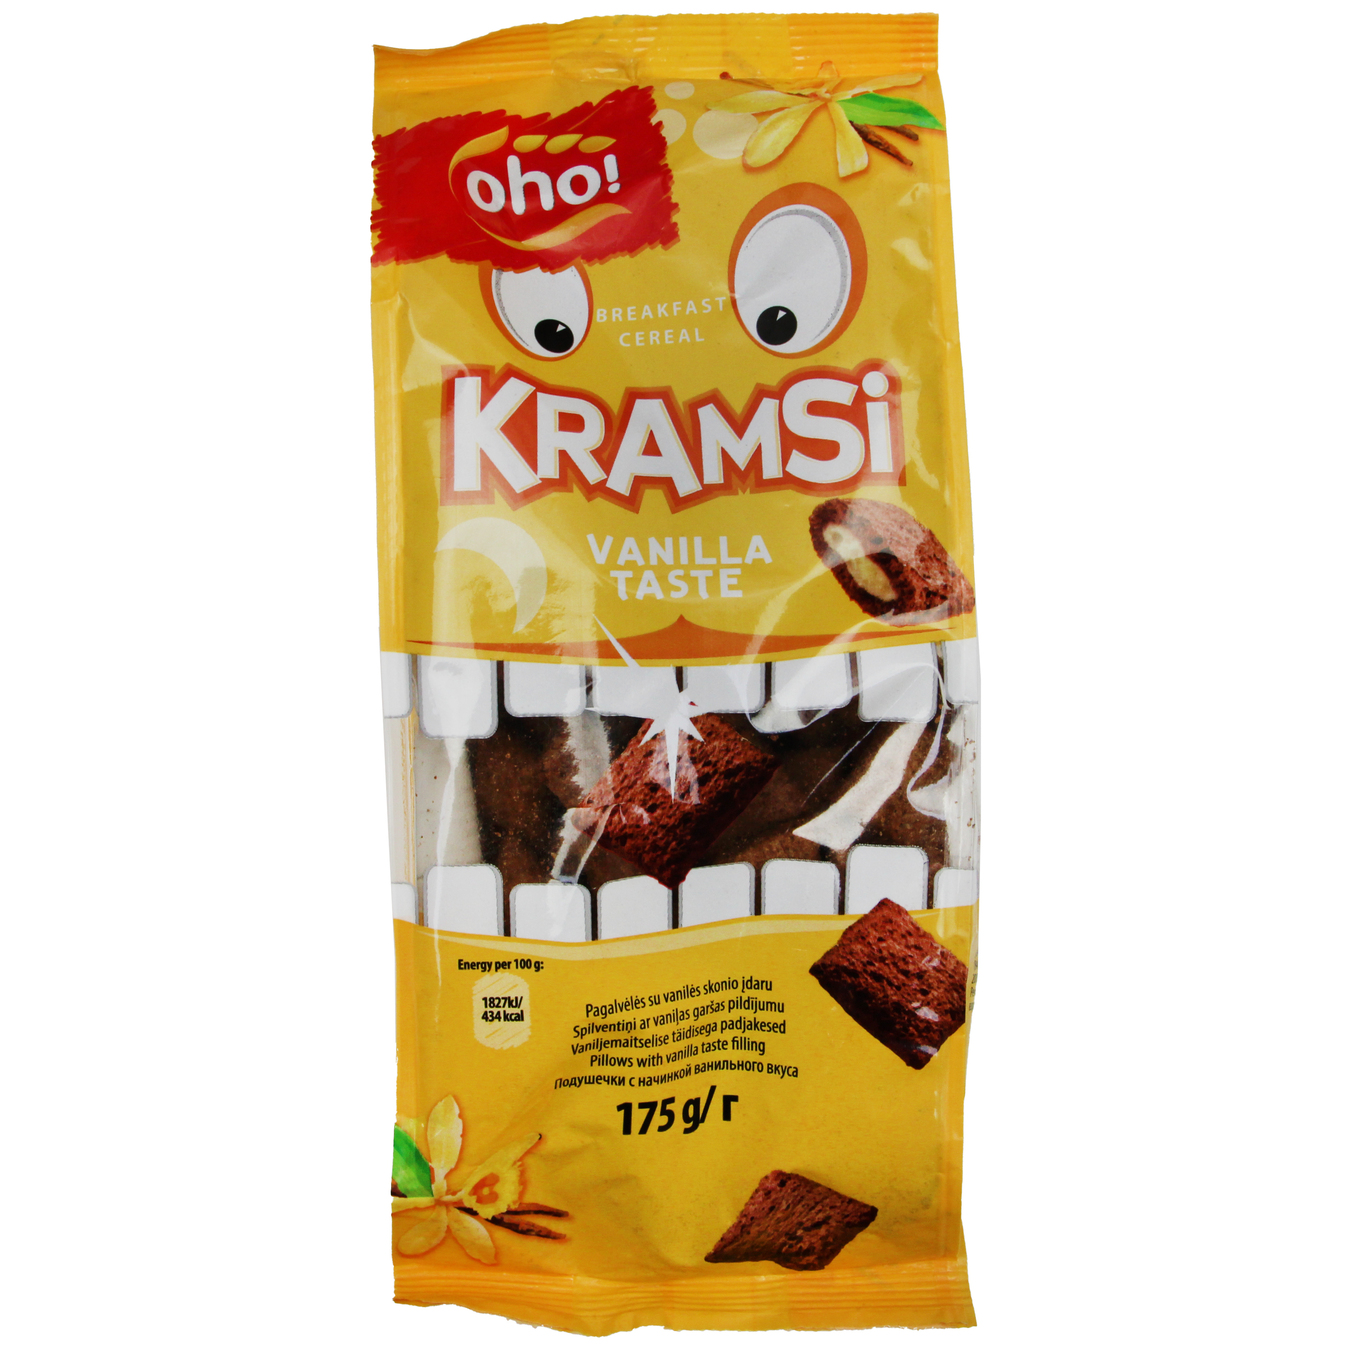 Oho Kramsi Grain Pads Stuffed with Vanilla Flavor Dry Breakfast 175g